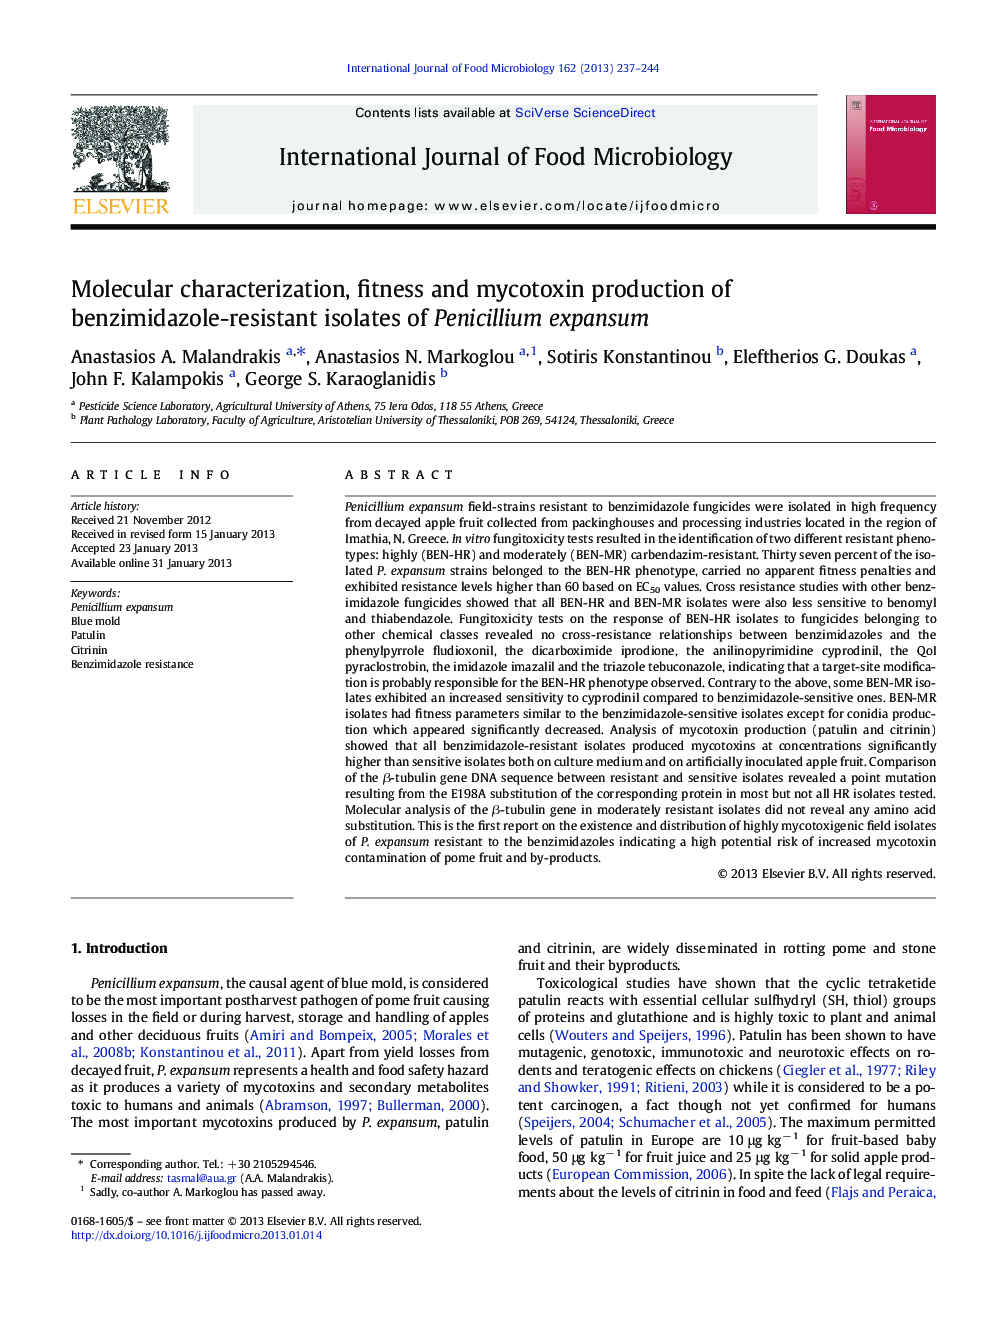 Molecular characterization, fitness and mycotoxin production of benzimidazole-resistant isolates of Penicillium expansum